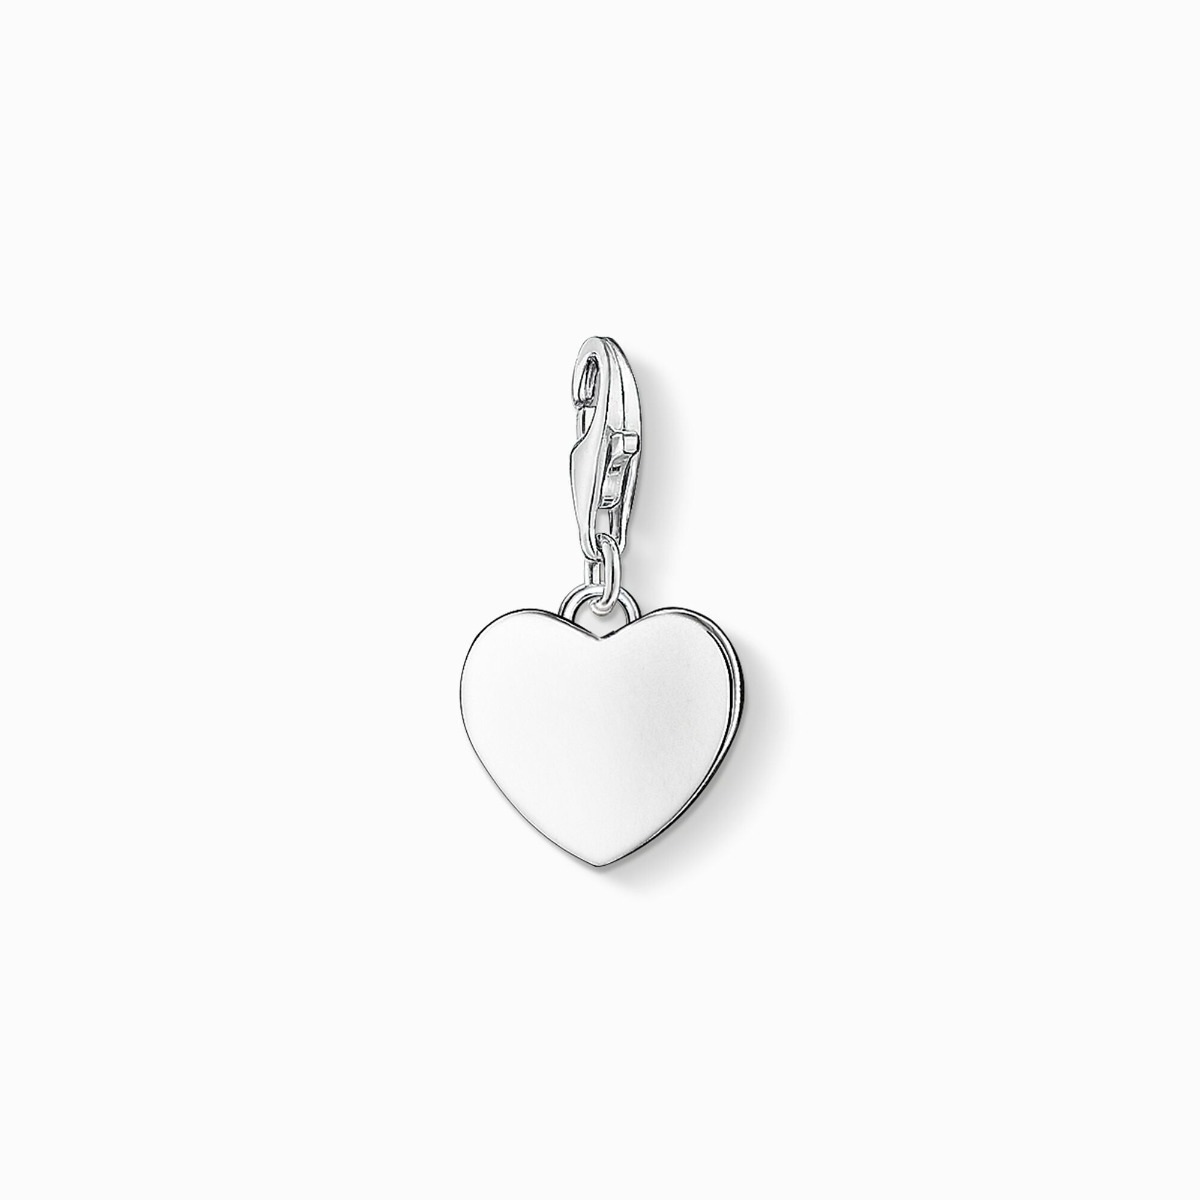 Thomas Sabo Charm Pendant - Silver Heart